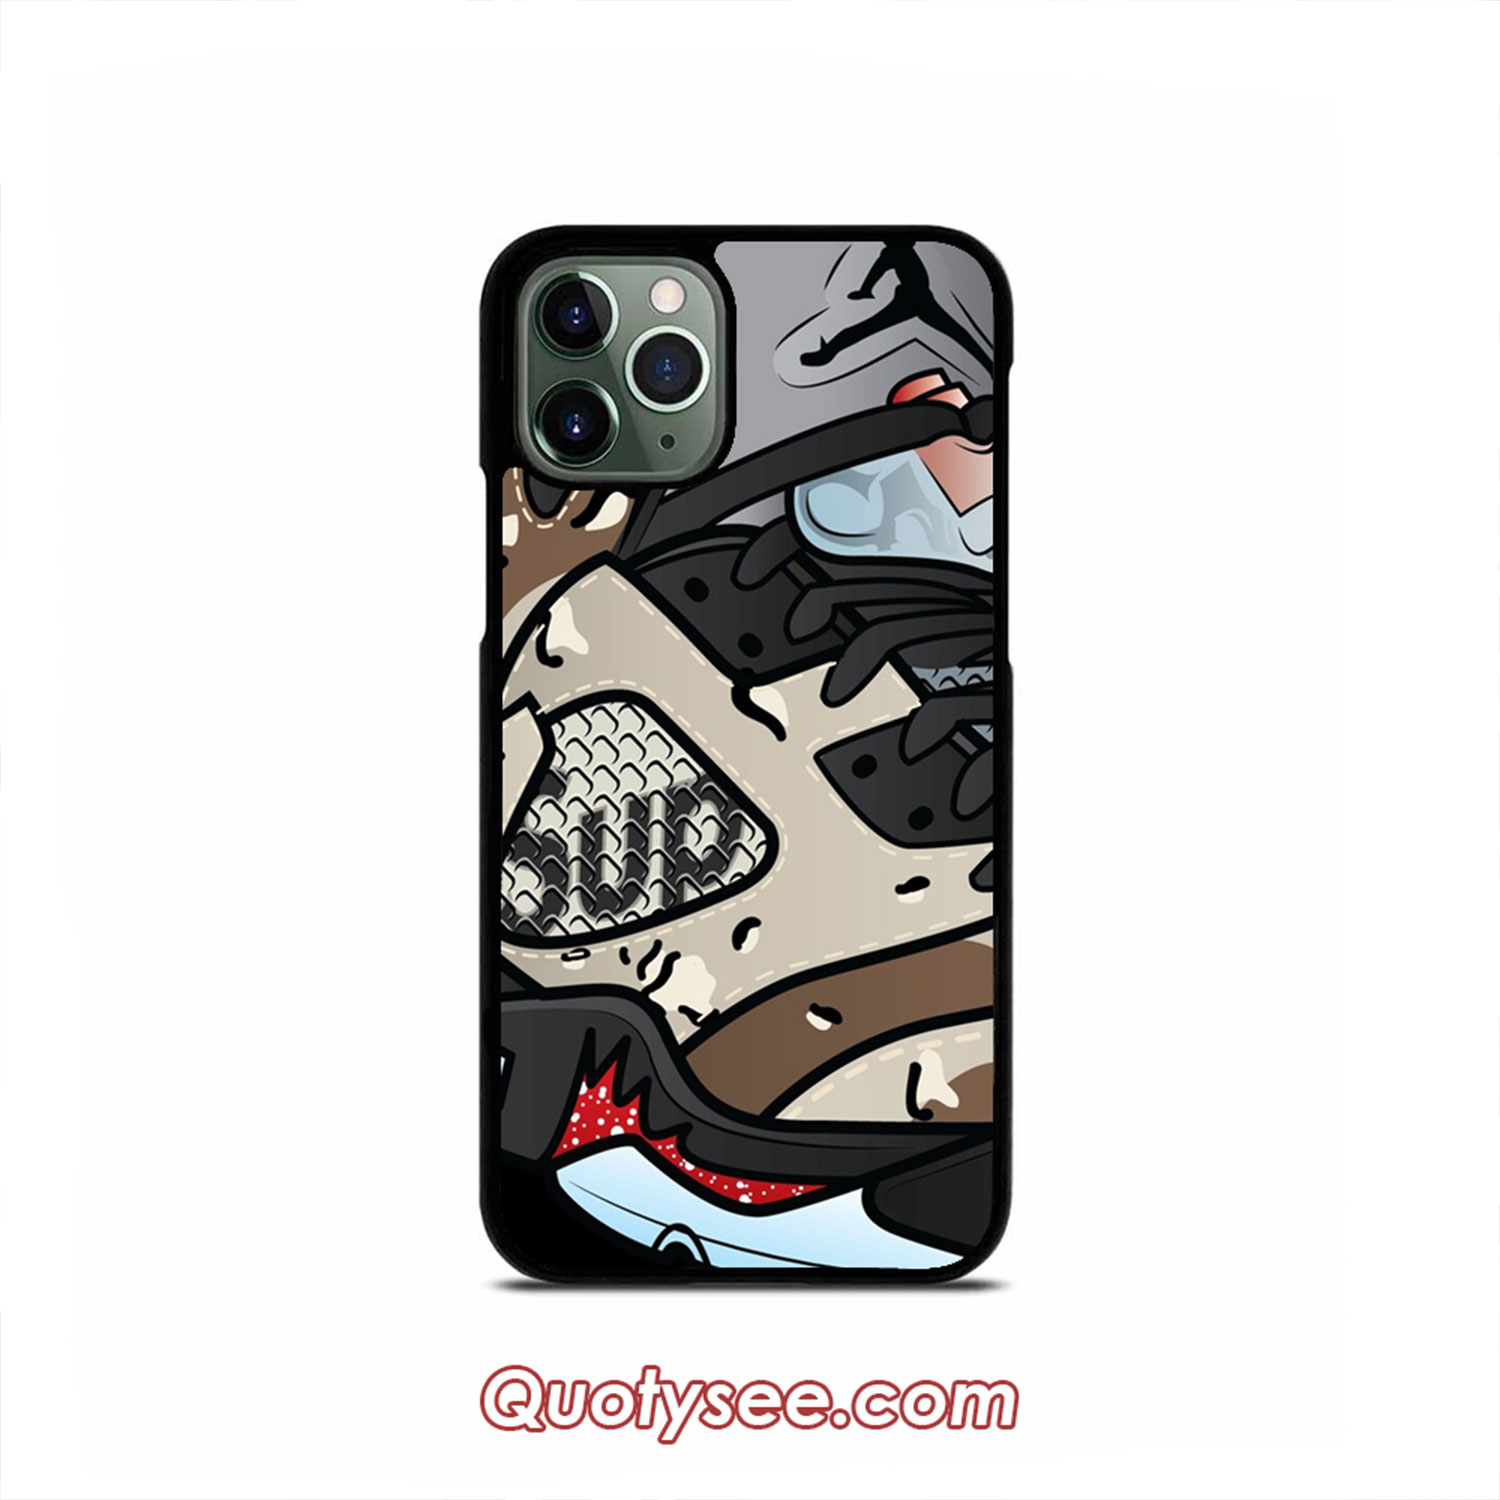 Supreme Camo Iphone Case 11 11 Pro 11 Pro Max Xs Max Xr X 8 8 Plus 7 7 Plus 6 6s Quotysee Com